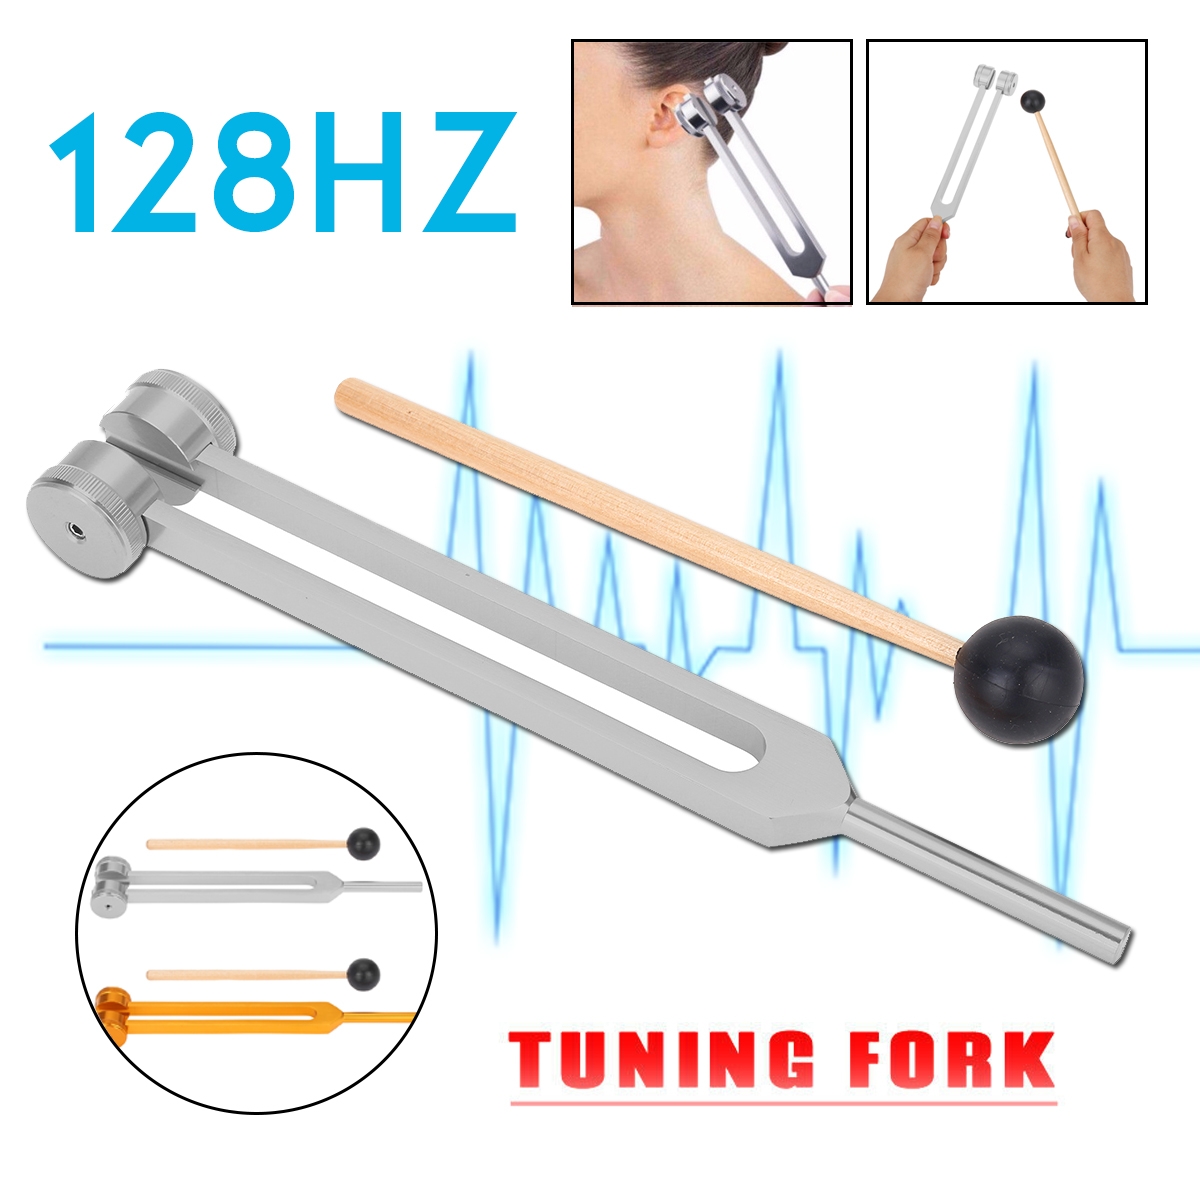 128HZ Aluminum Alloy Silver Tuning Fork Chakra Hammer Ball Diagnostic Tools